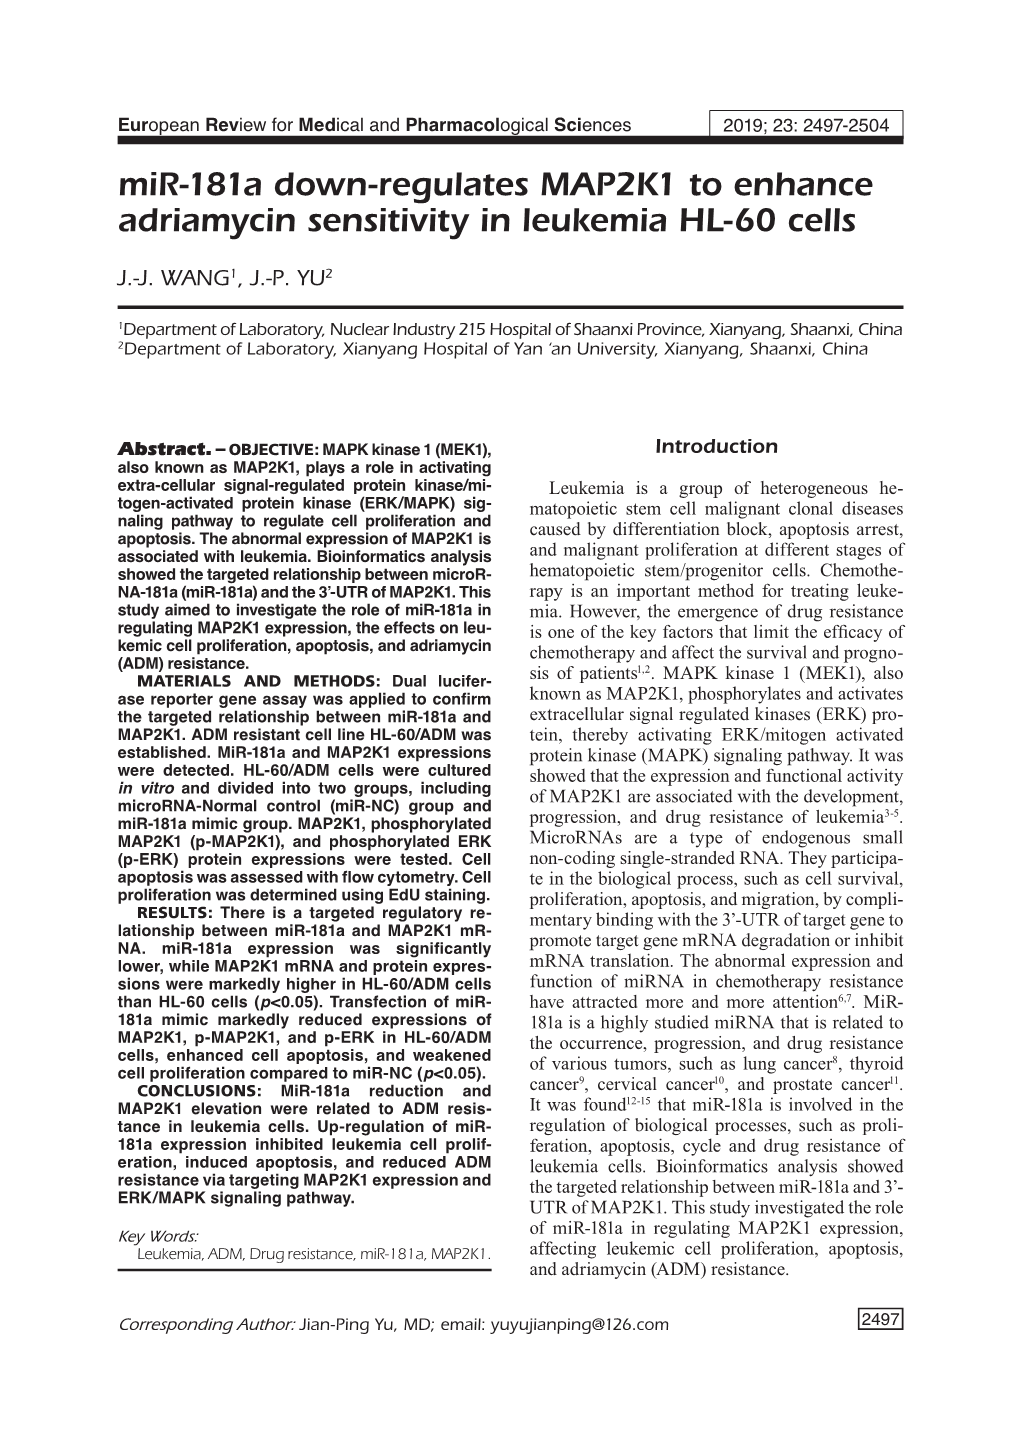 Mir-181A Down-Regulates MAP2K1 to Enhance Adriamycin Sensitivity in Leukemia HL-60 Cells